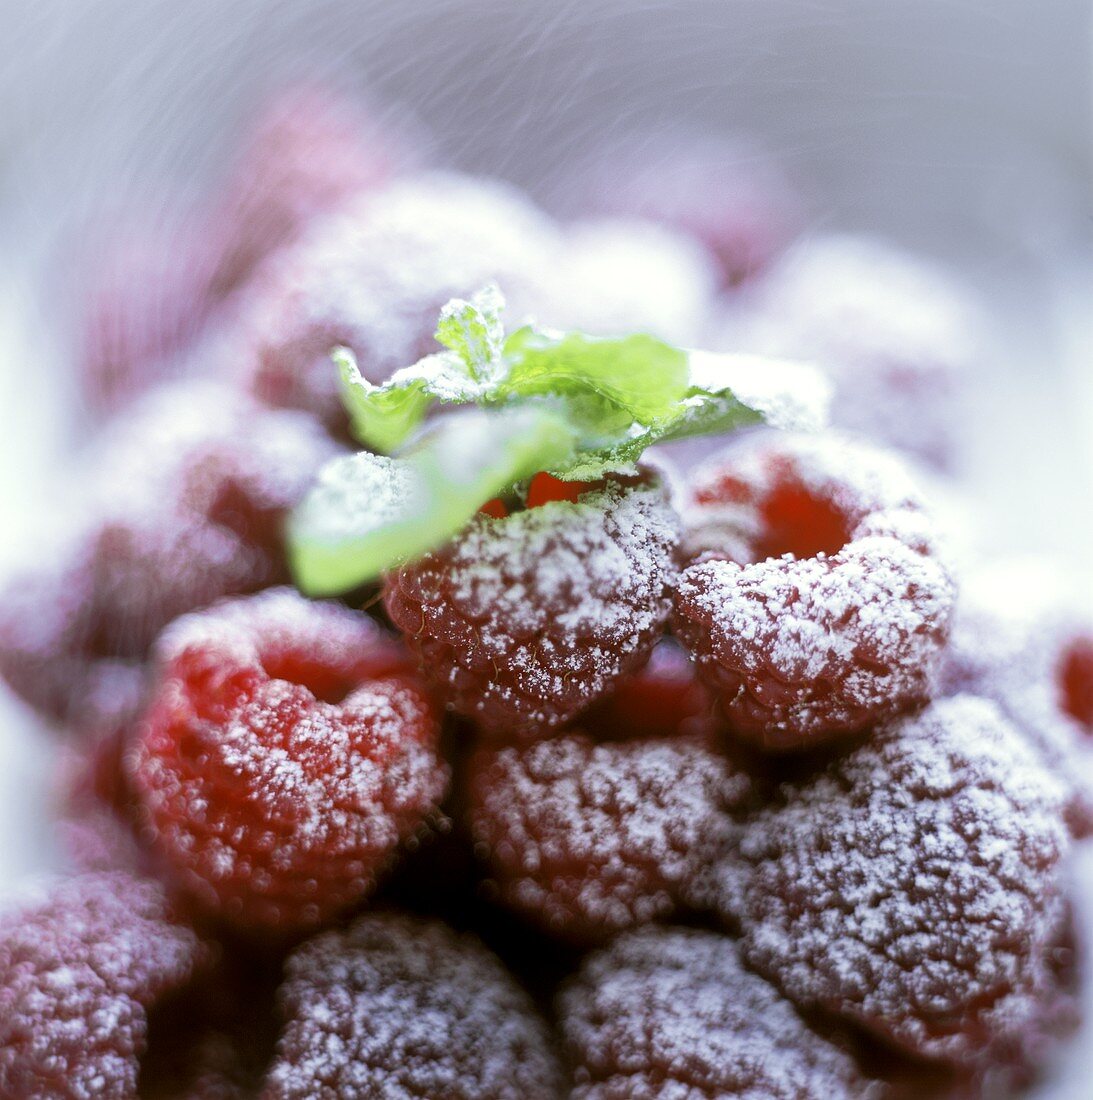 Sugared raspberries